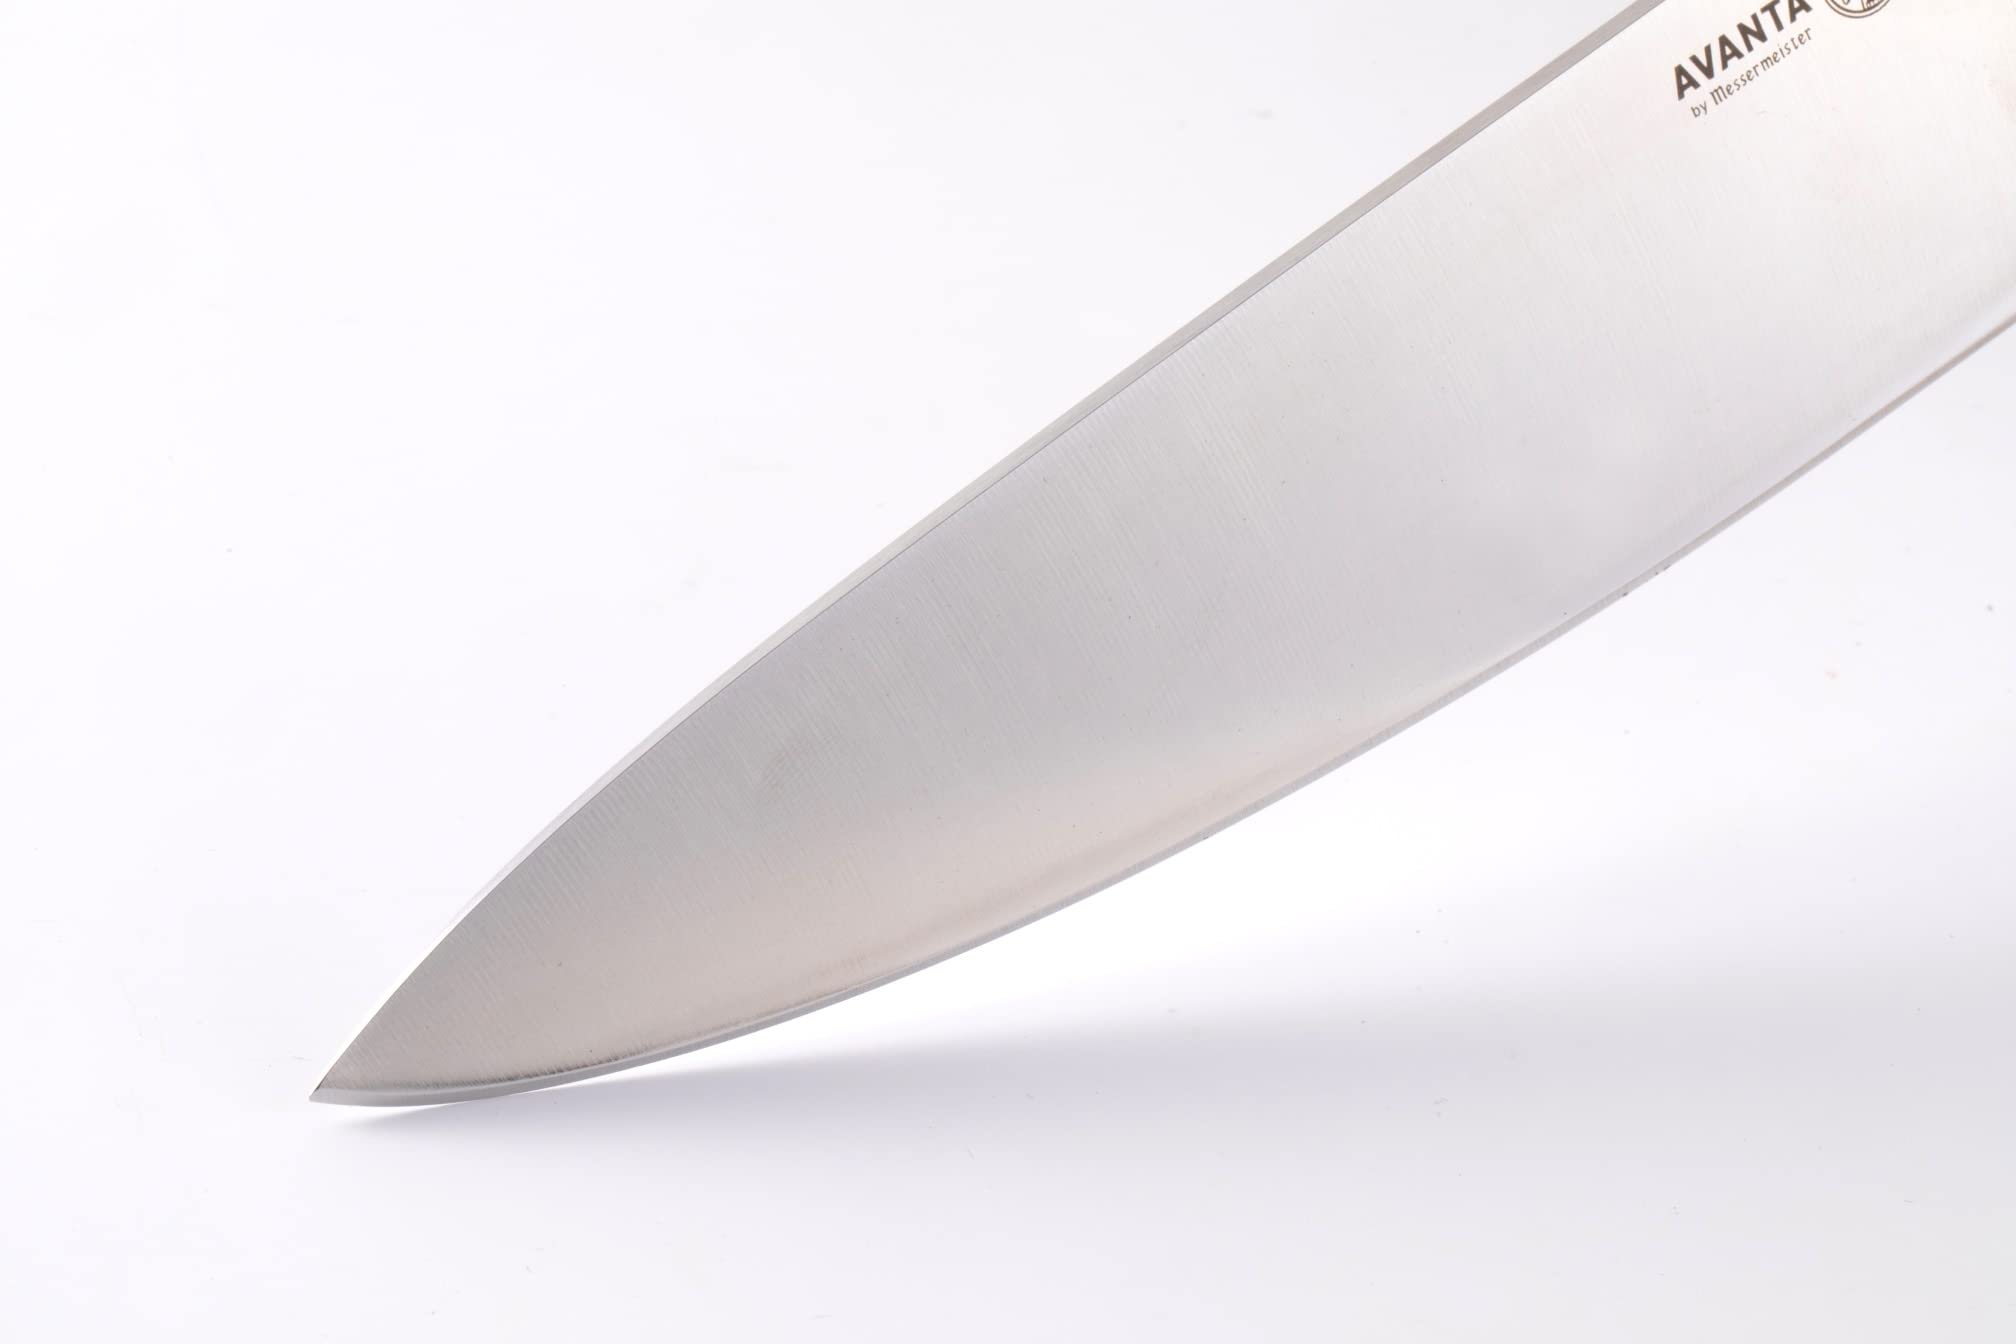 Messermeister Avanta 10-Piece Pakkawood Knife Block Set - German X50 Stainless Steel - Includes 4 Speciality Knives, Heavy-Weight Fork, 4 Steak Knives & Magnetic Knife Block